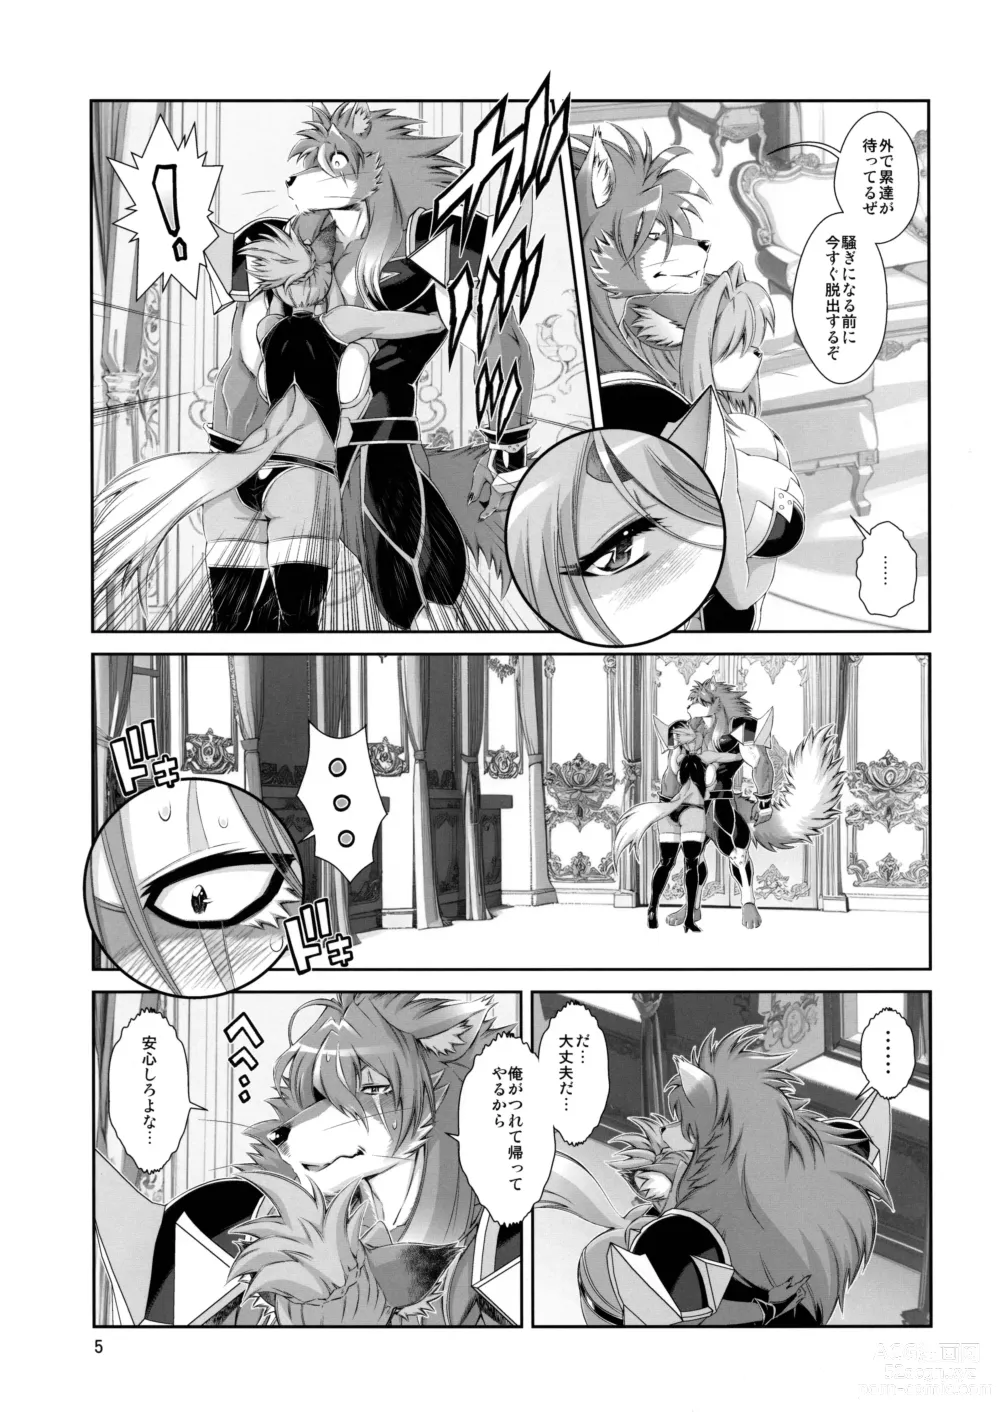 Page 6 of doujinshi Mahou no Juujin Foxy Rena 19